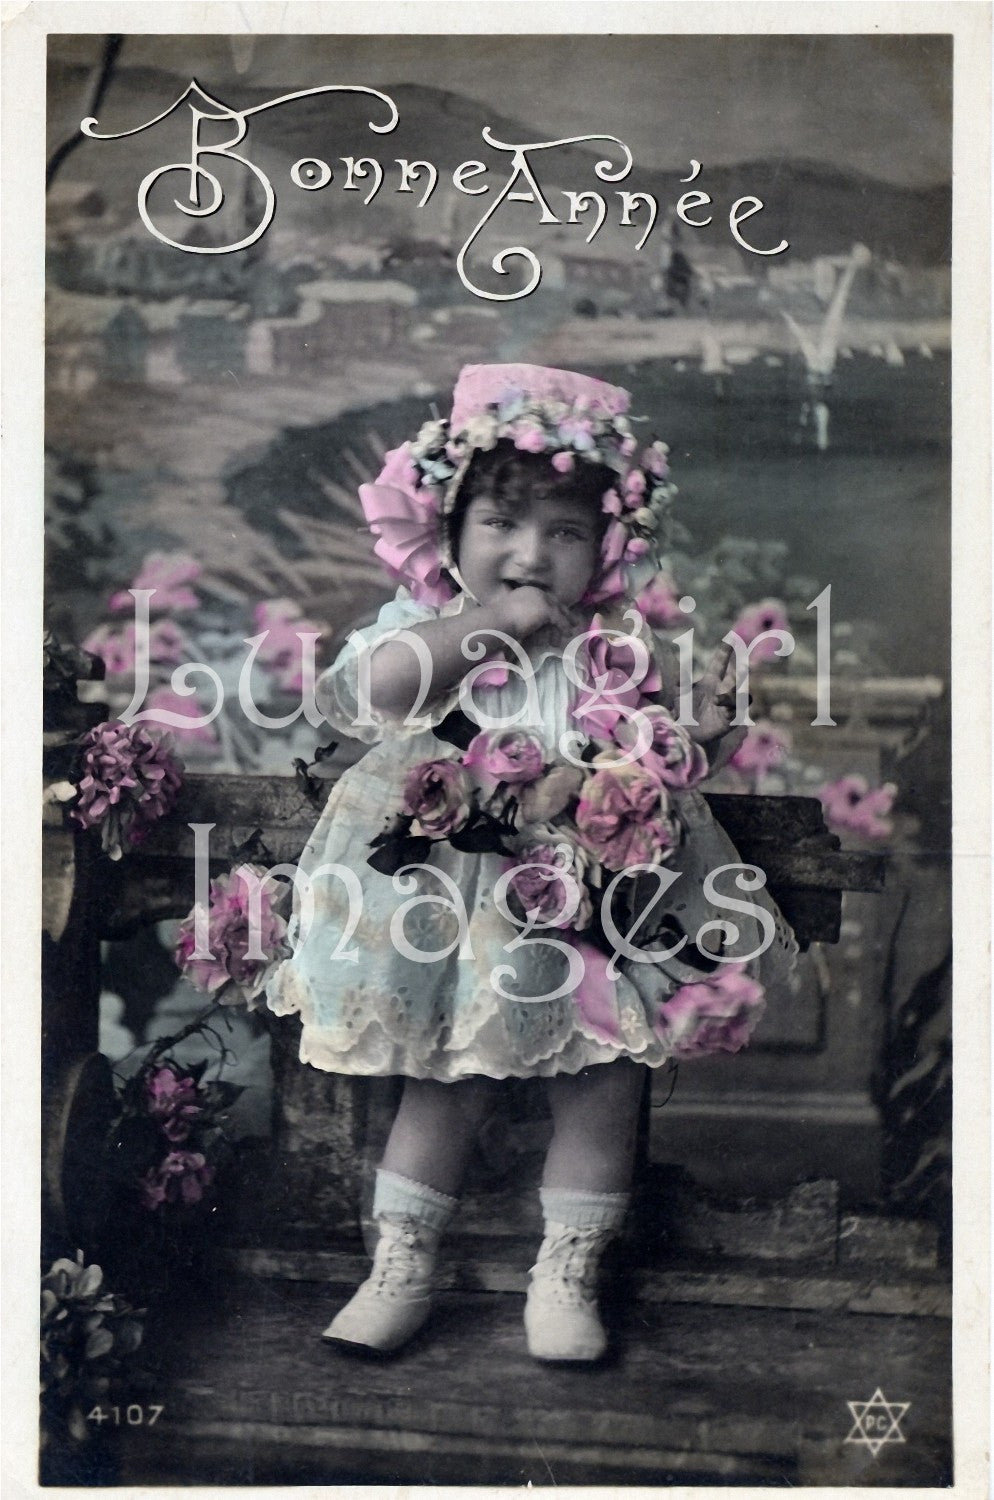 Vintage Photos Babies & Toddlers: 220 Images - Lunagirl